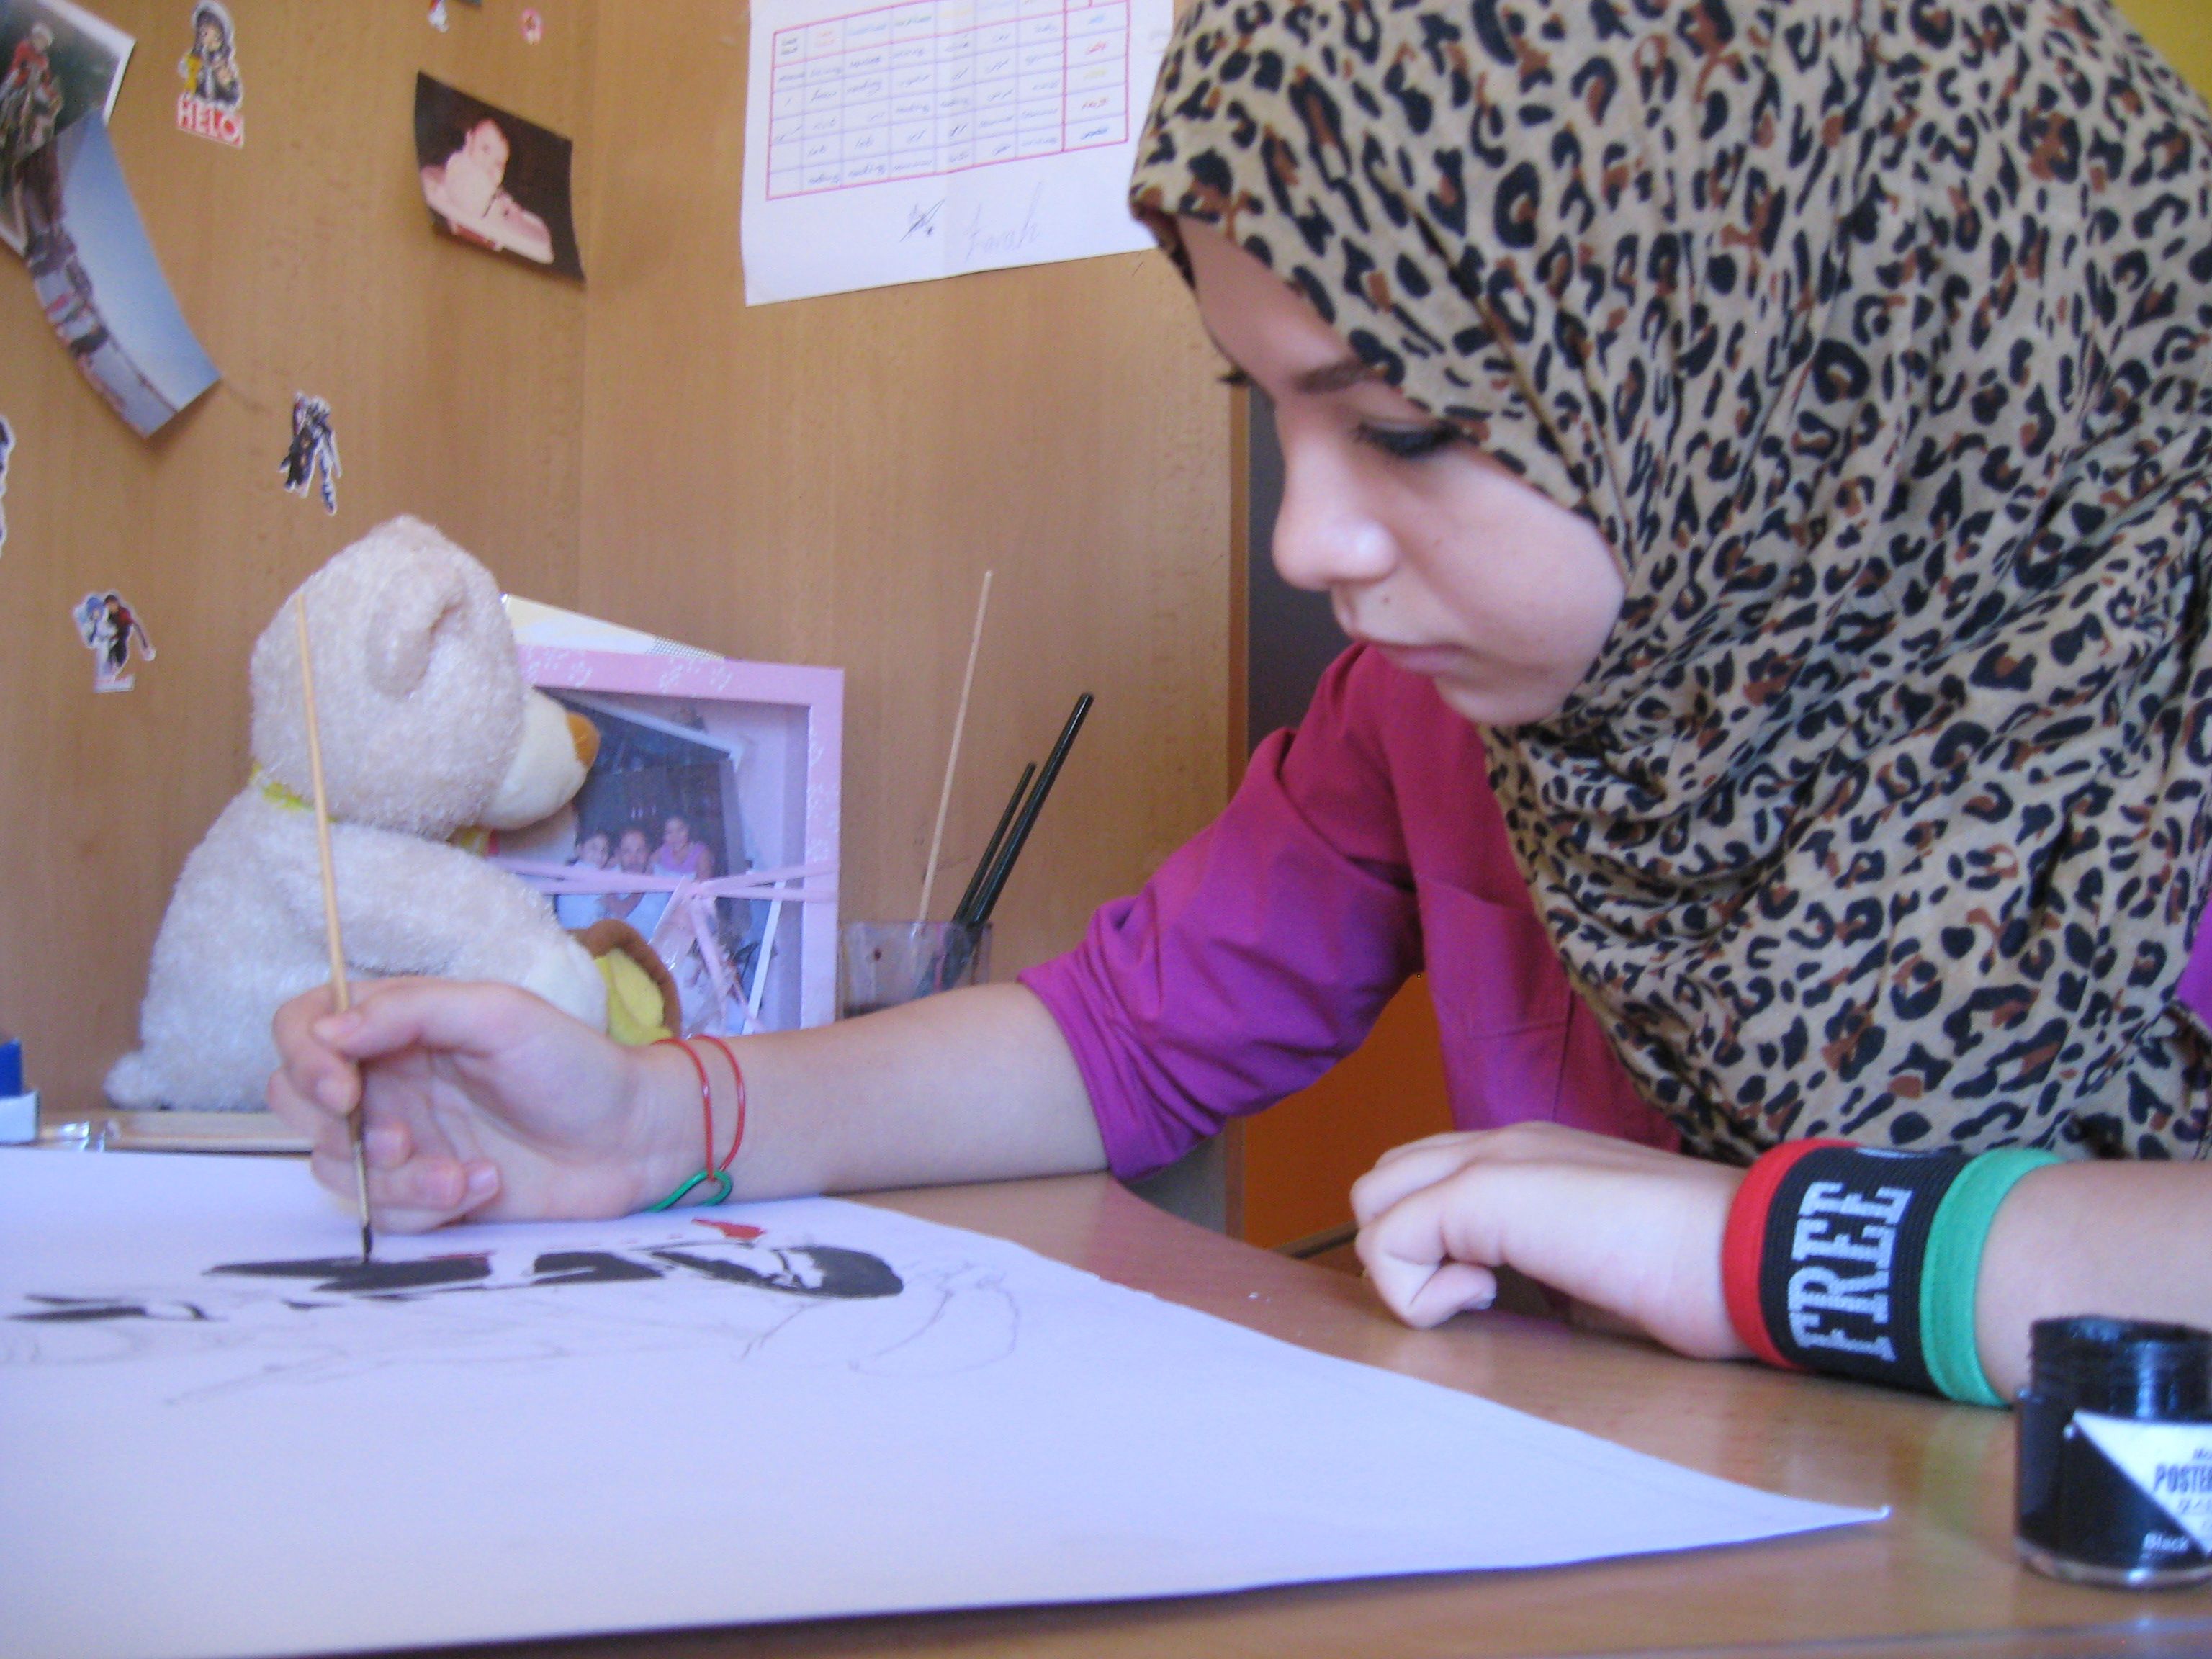 Farah Jamal Bin Yezza, an 18 year old who has never before shown her art. Libya.